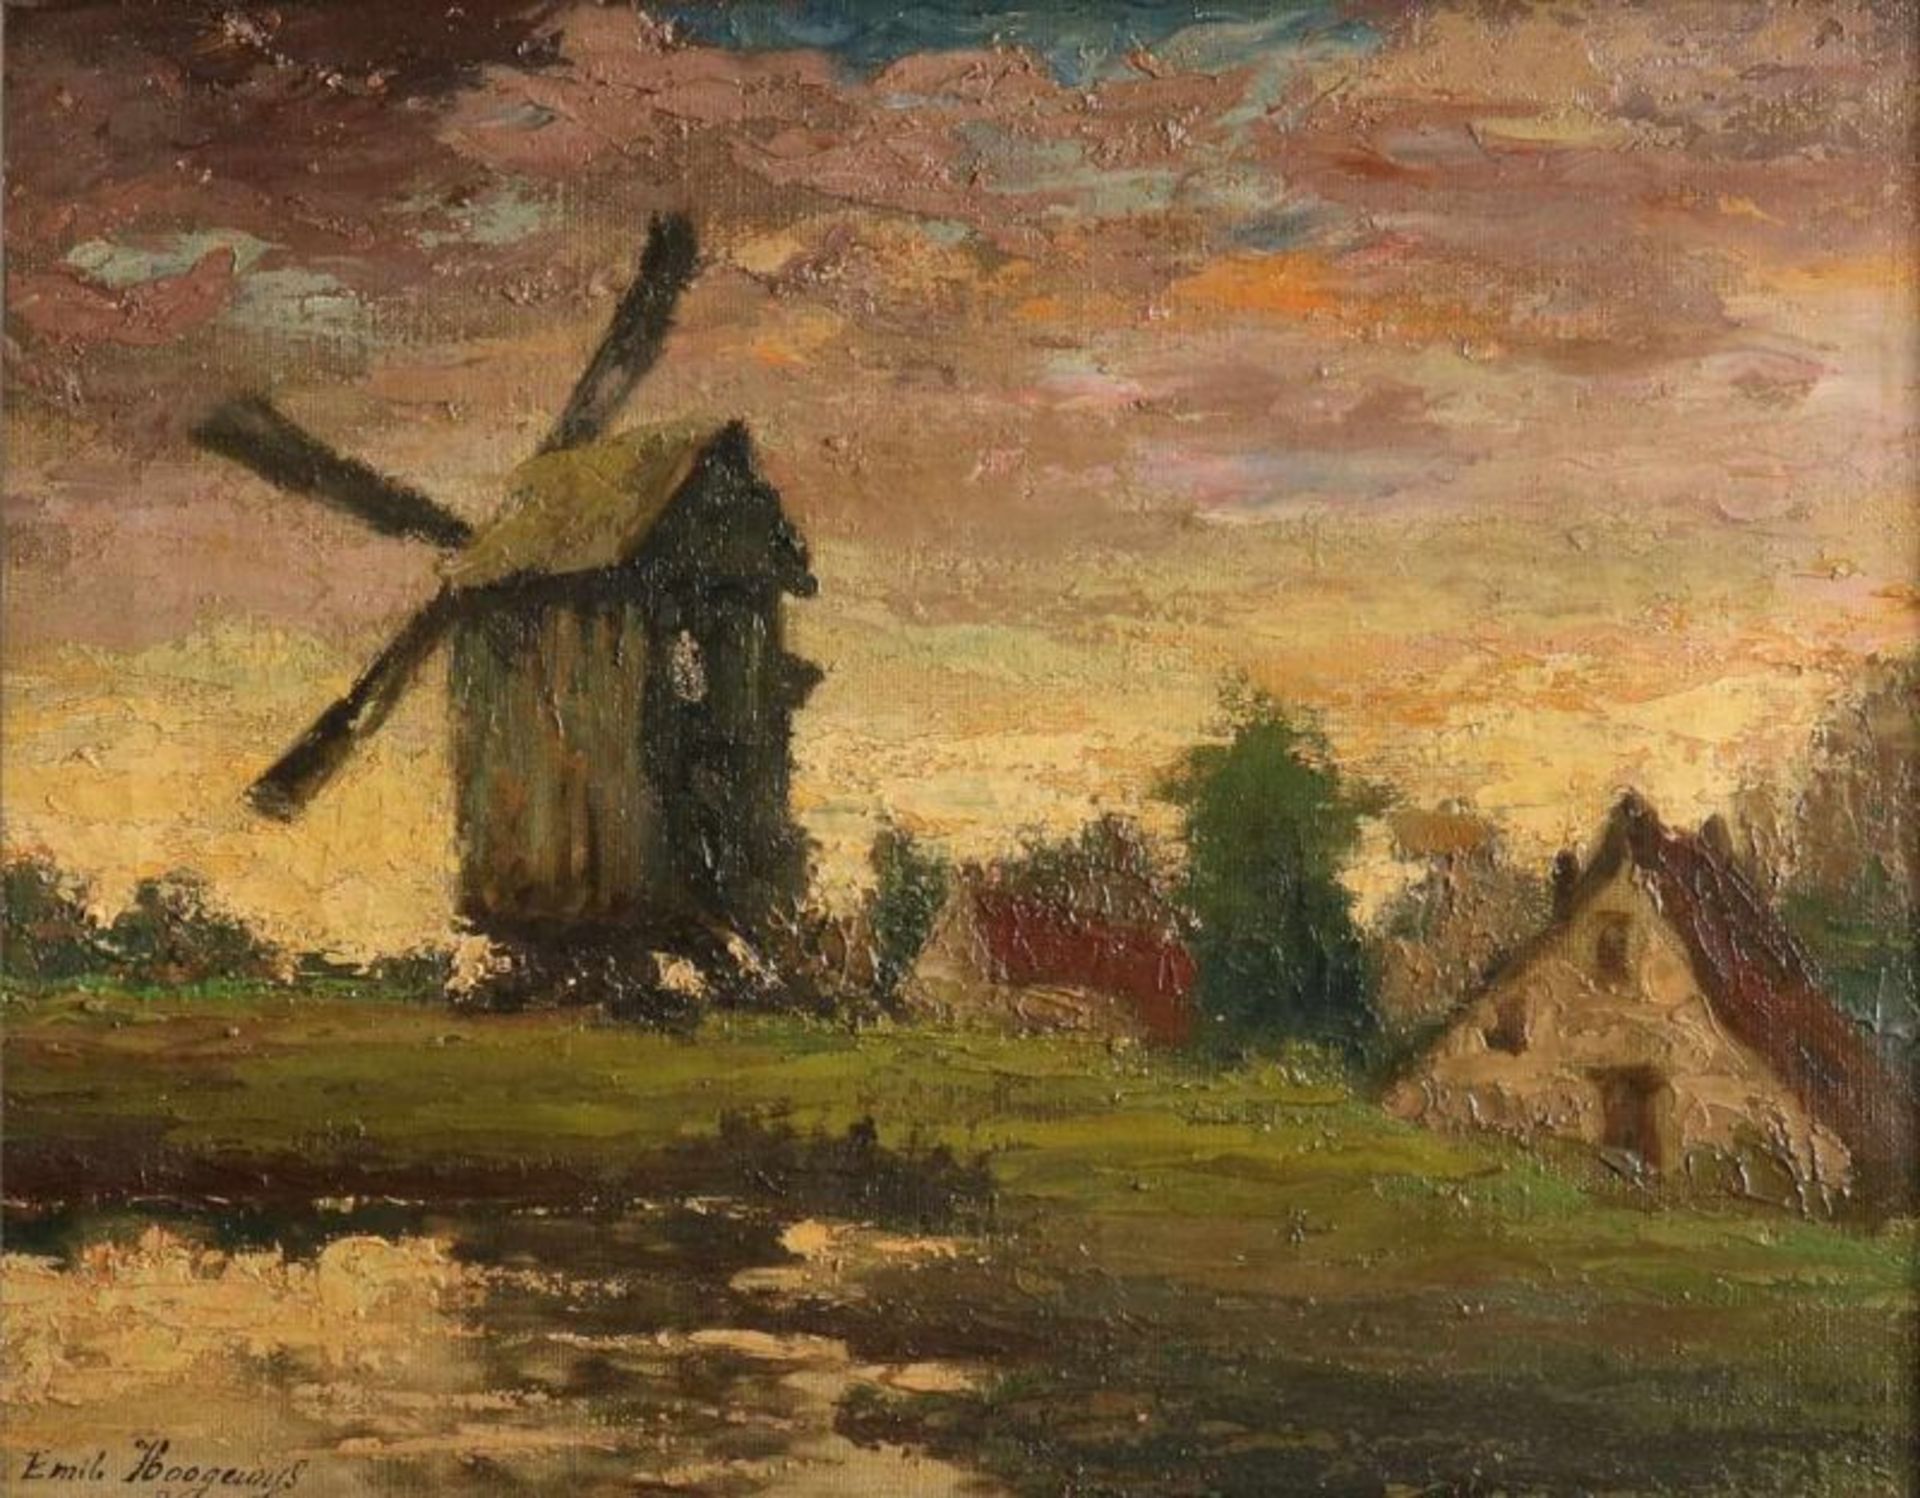 Emile Hoogewijs. Circa 1915. Landscape with a mill. Belgian School. Oil on linen. Dimensions: 36 x